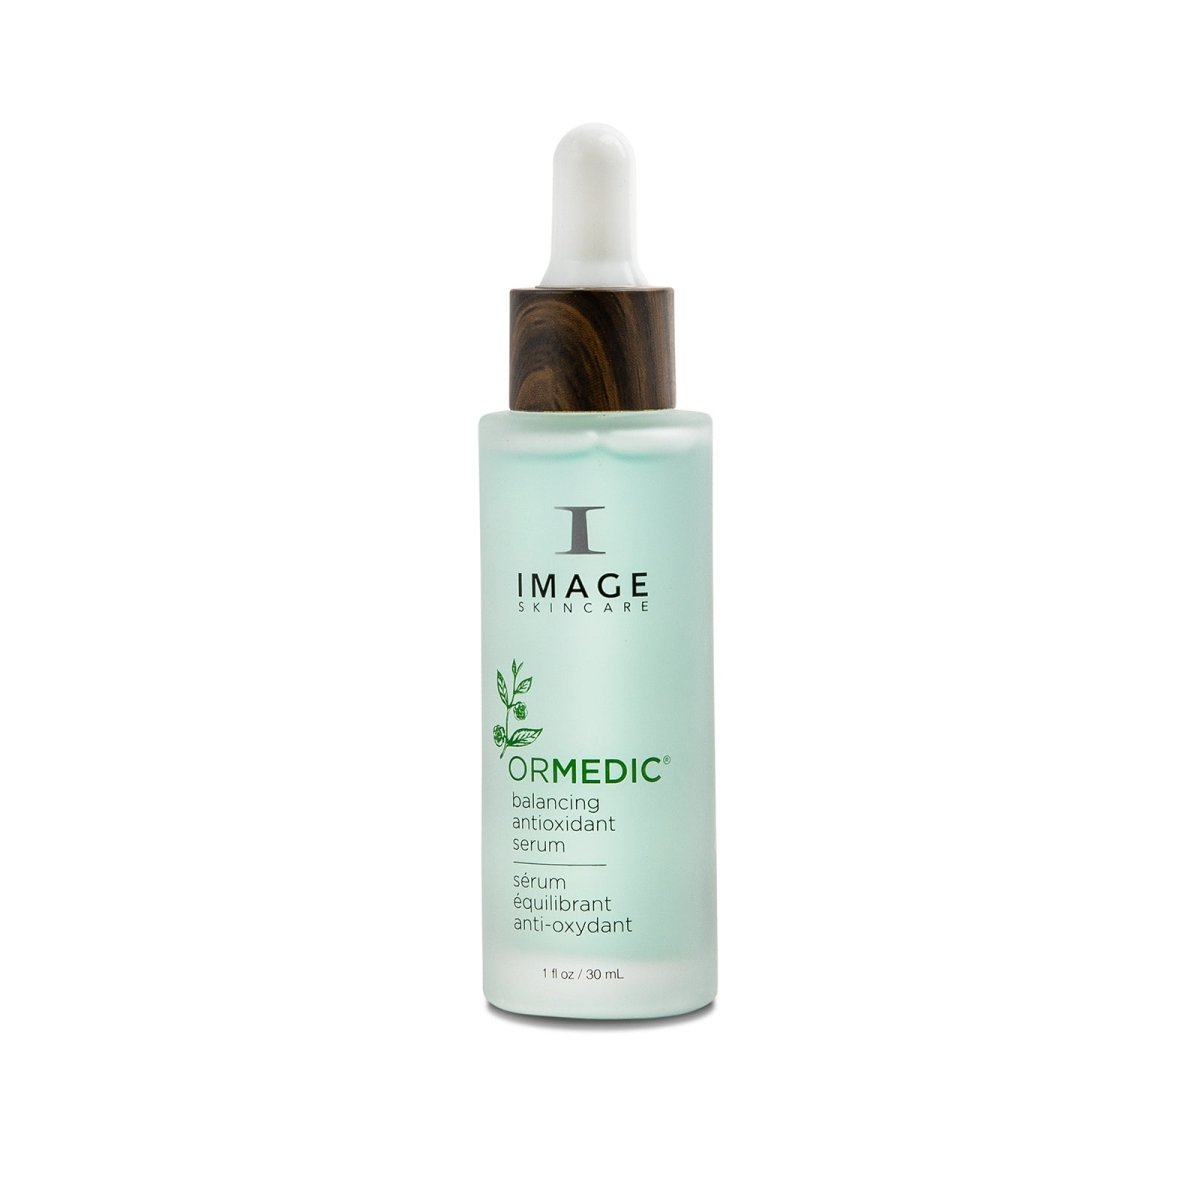 IMAGE Skincare ORMEDIC® Balancing Antioxidant Serum - SkincareEssentials